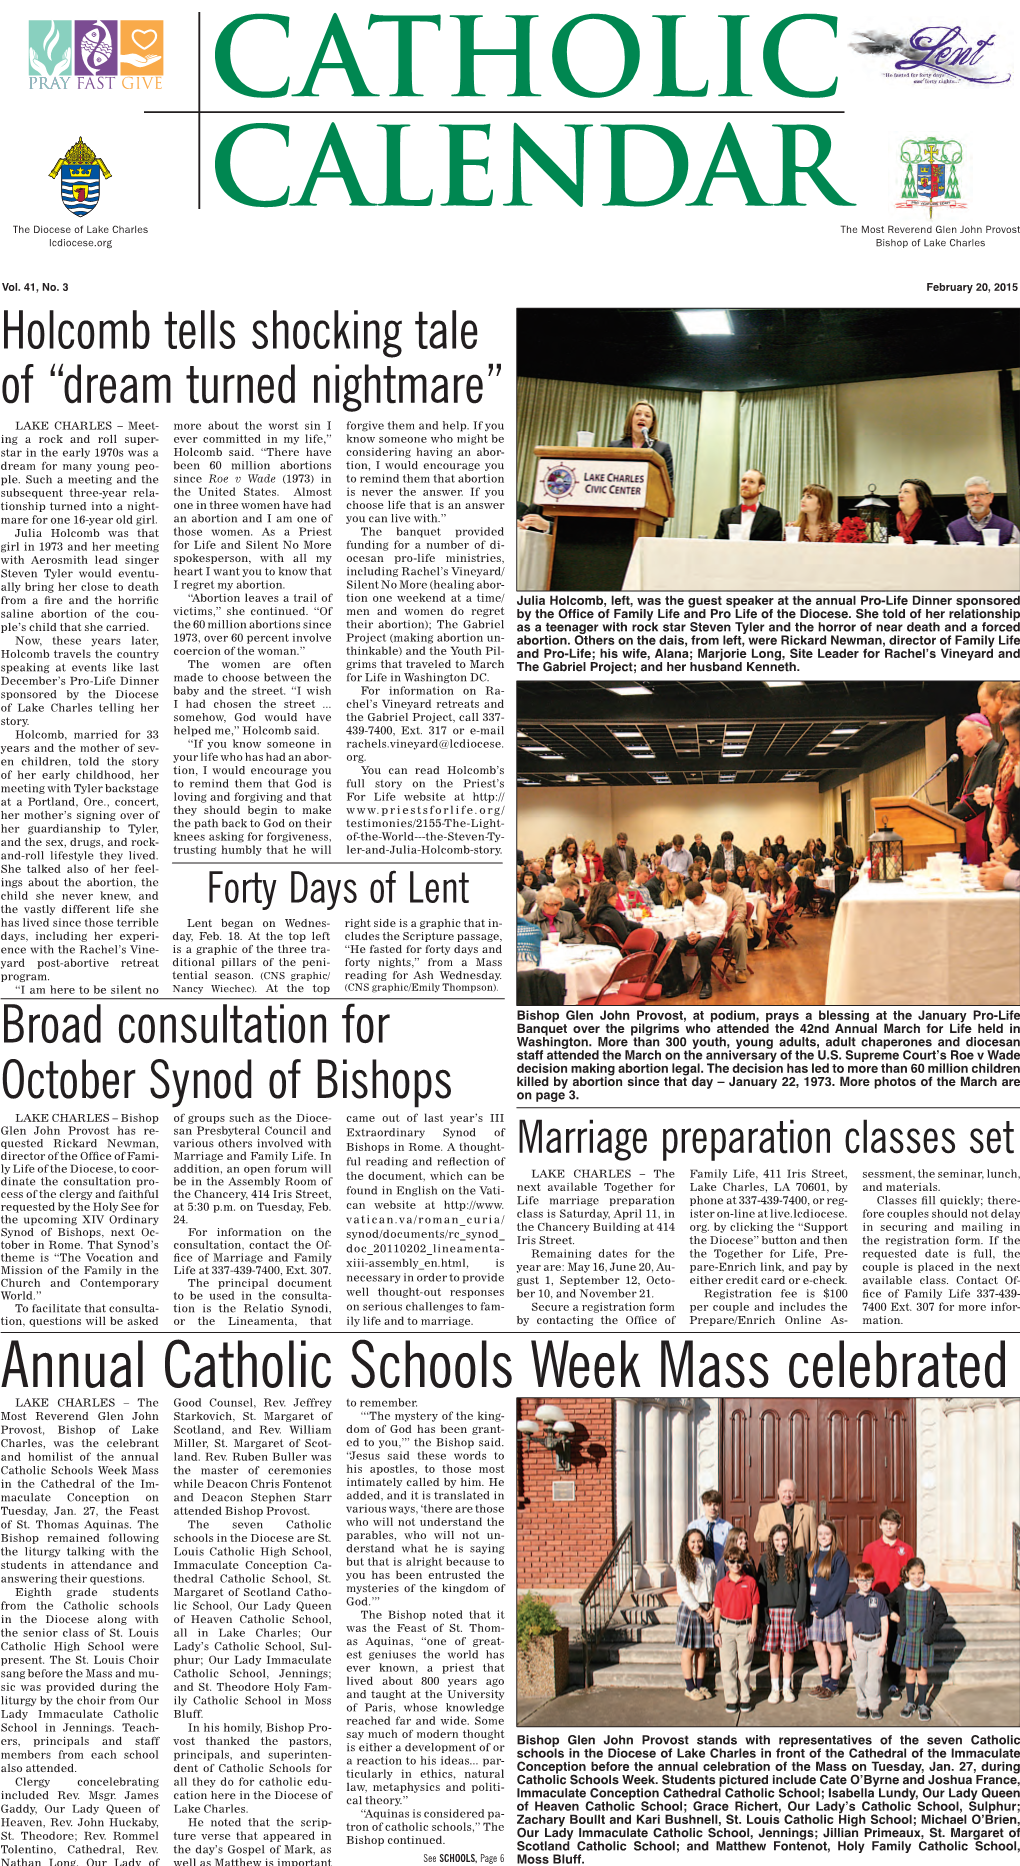 Annual Catholic Schools Week Mass Celebrated LAKE CHARLES – the Good Counsel, Rev